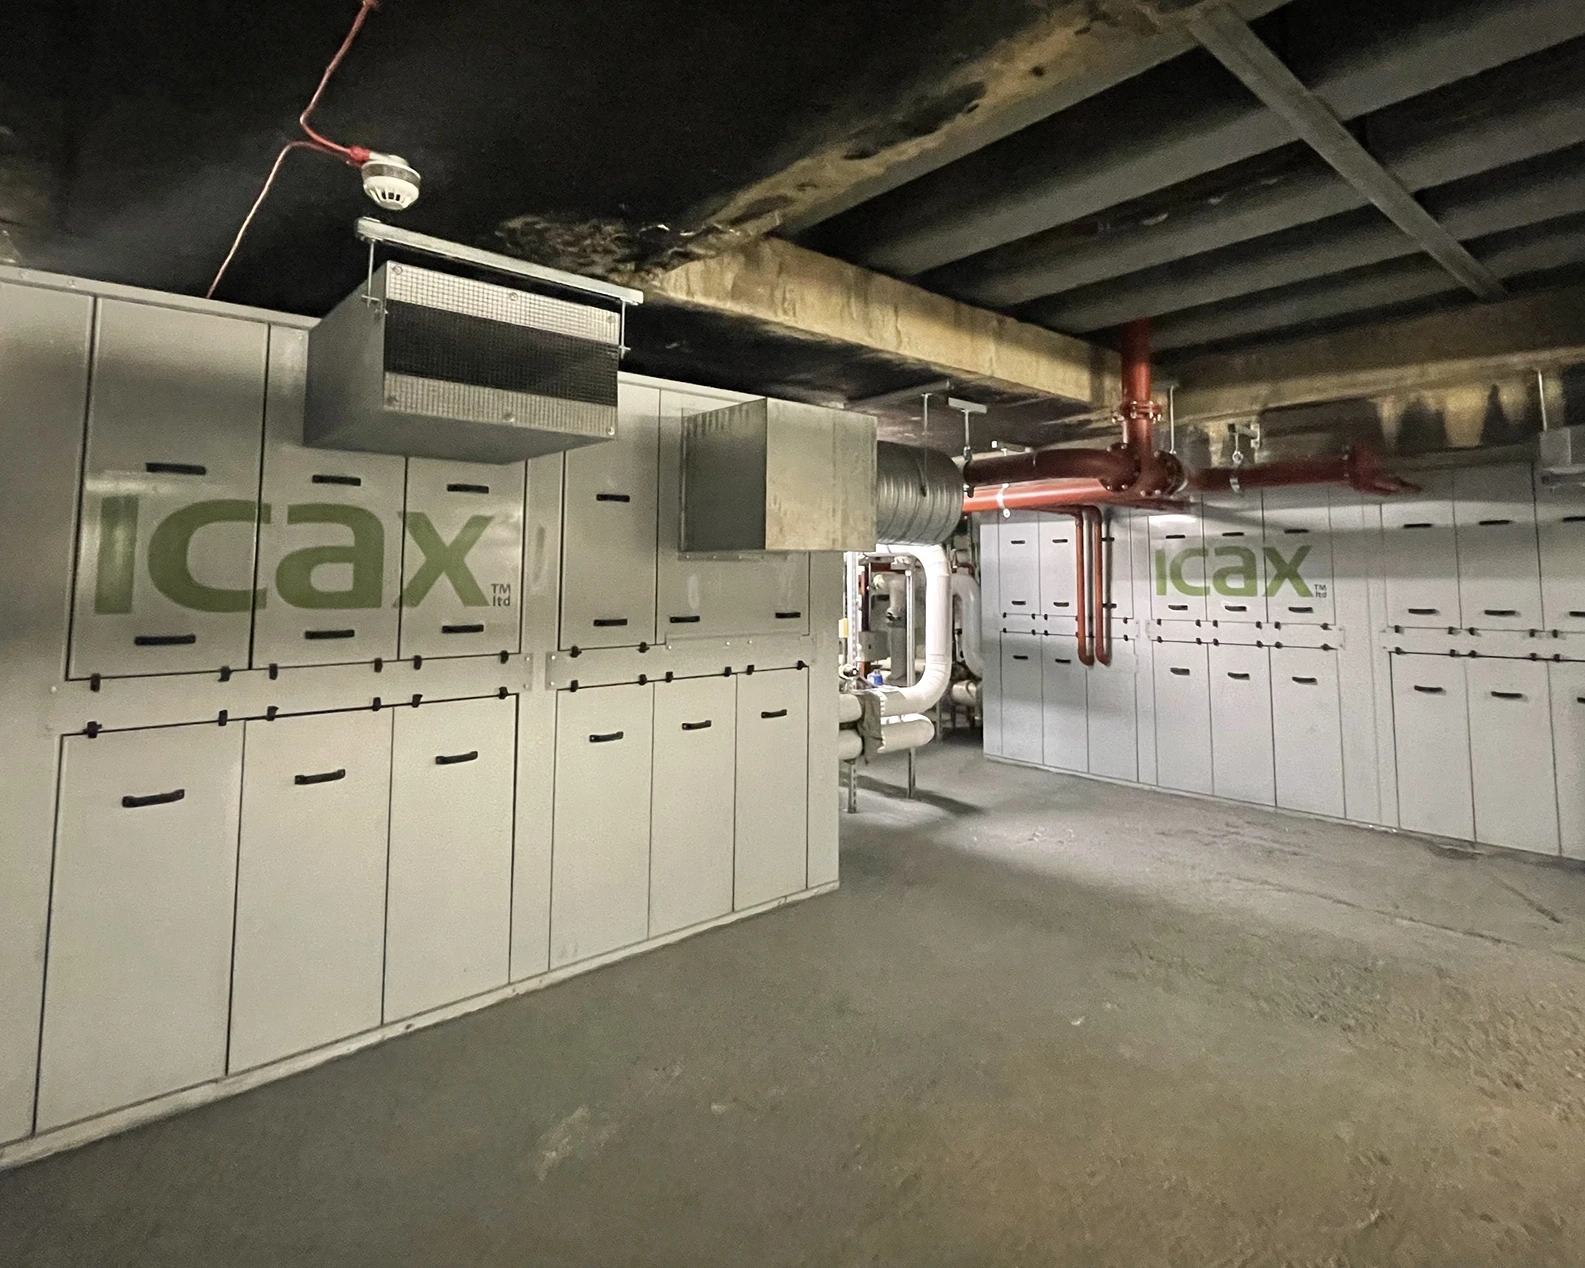 ICAX Heat Pumps, Southwark